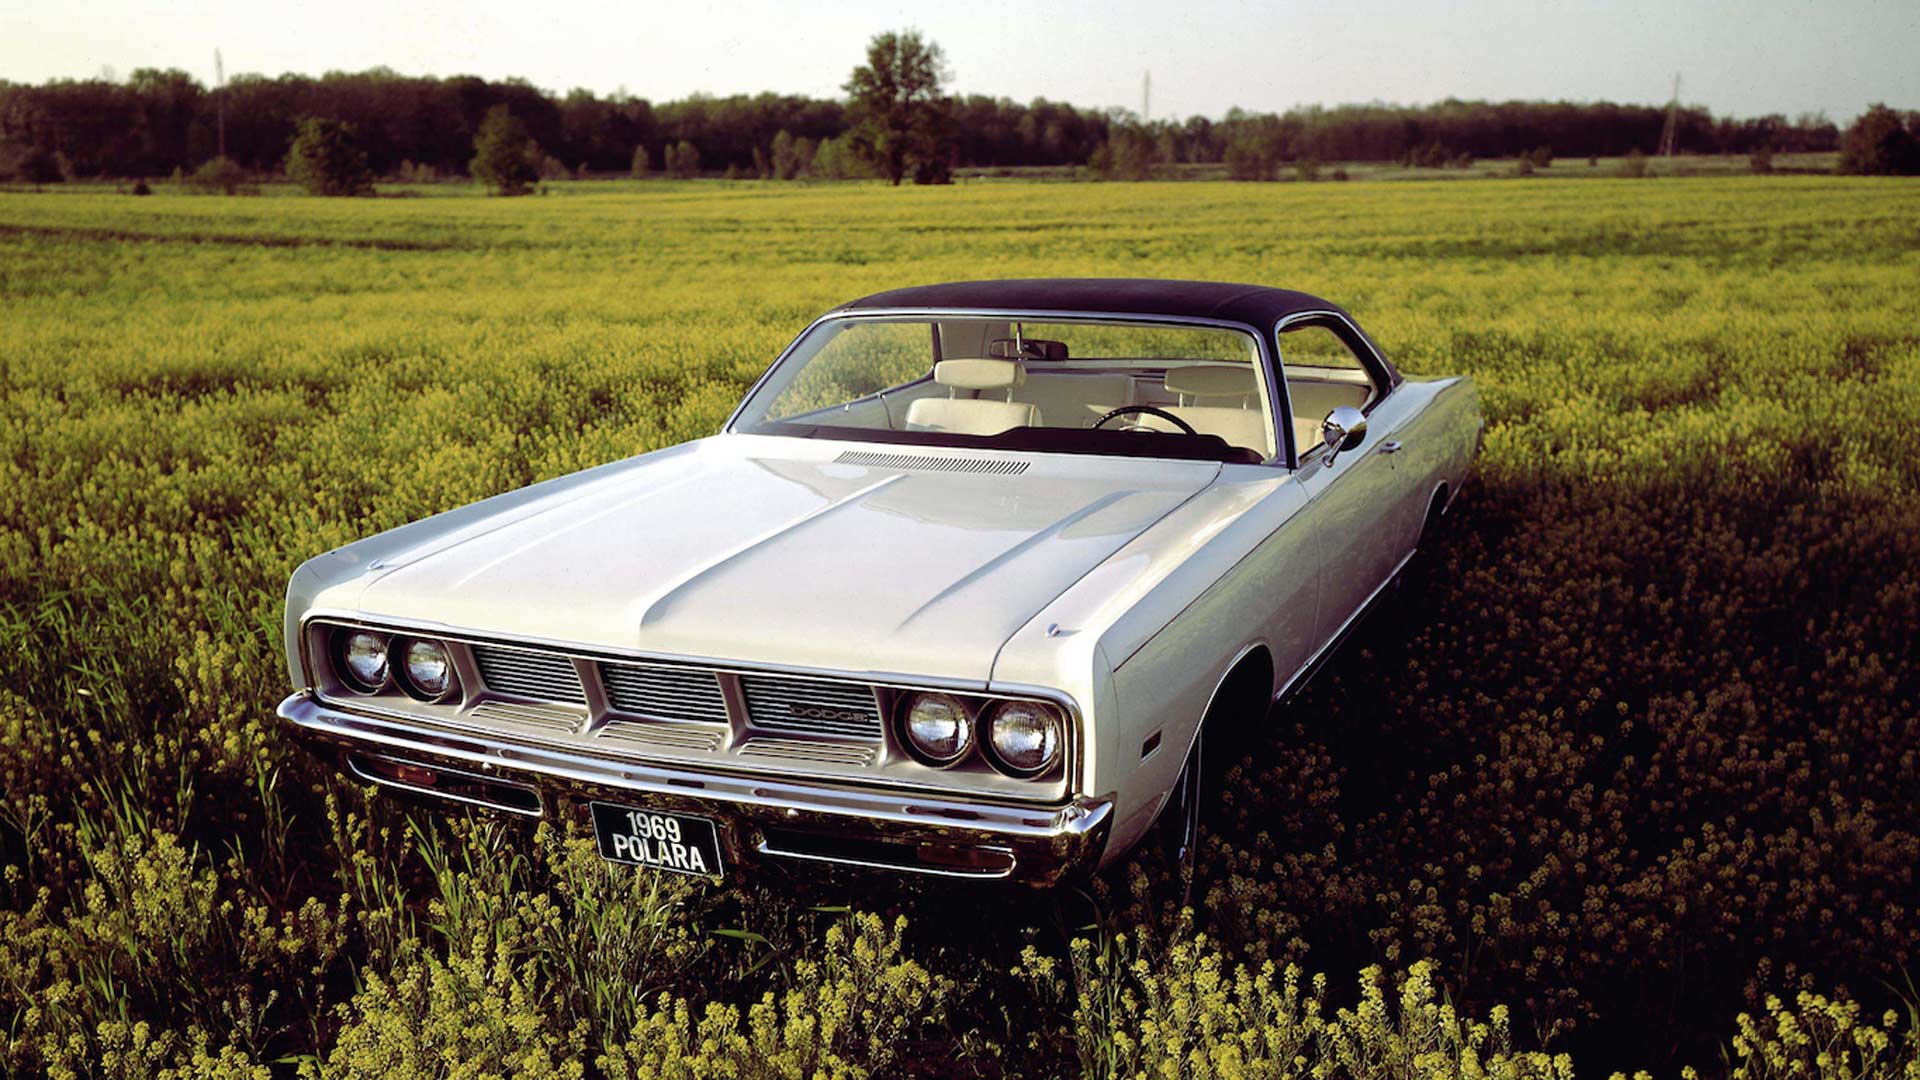 1969 Dodge Polara – 220.8 inches